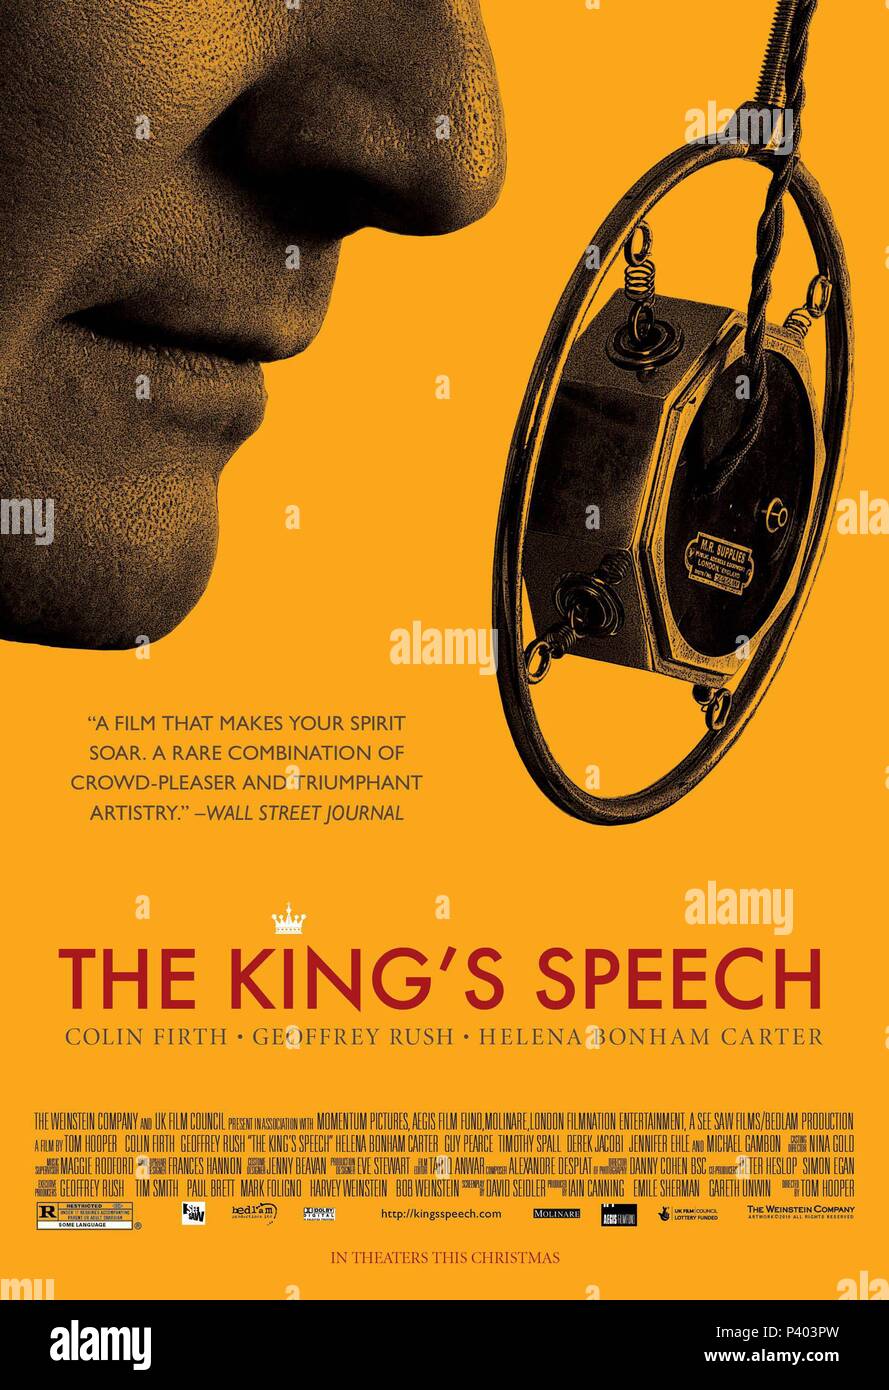 Original Film Title: THE KING'S SPEECH.  English Title: THE KING'S SPEECH.  Film Director: TOM HOOPER.  Year: 2010. Credit: SEE SAW FILMS / Album Stock Photo